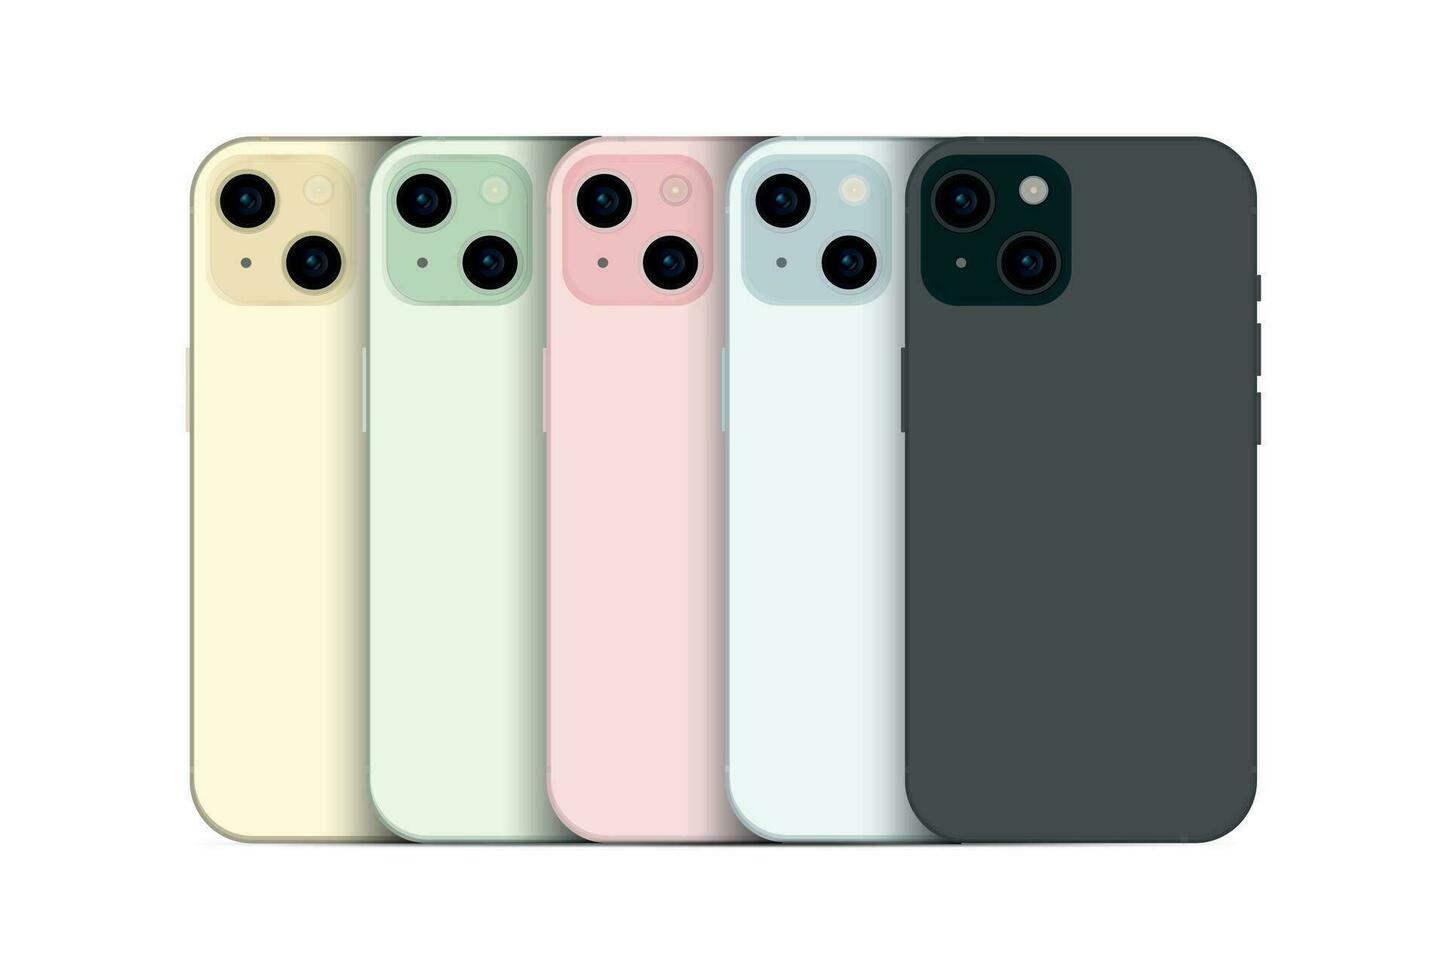 New Smartphone 15, Modern Smartphone Gadget, Set of 5 Pieces in New Original Colors - Vector